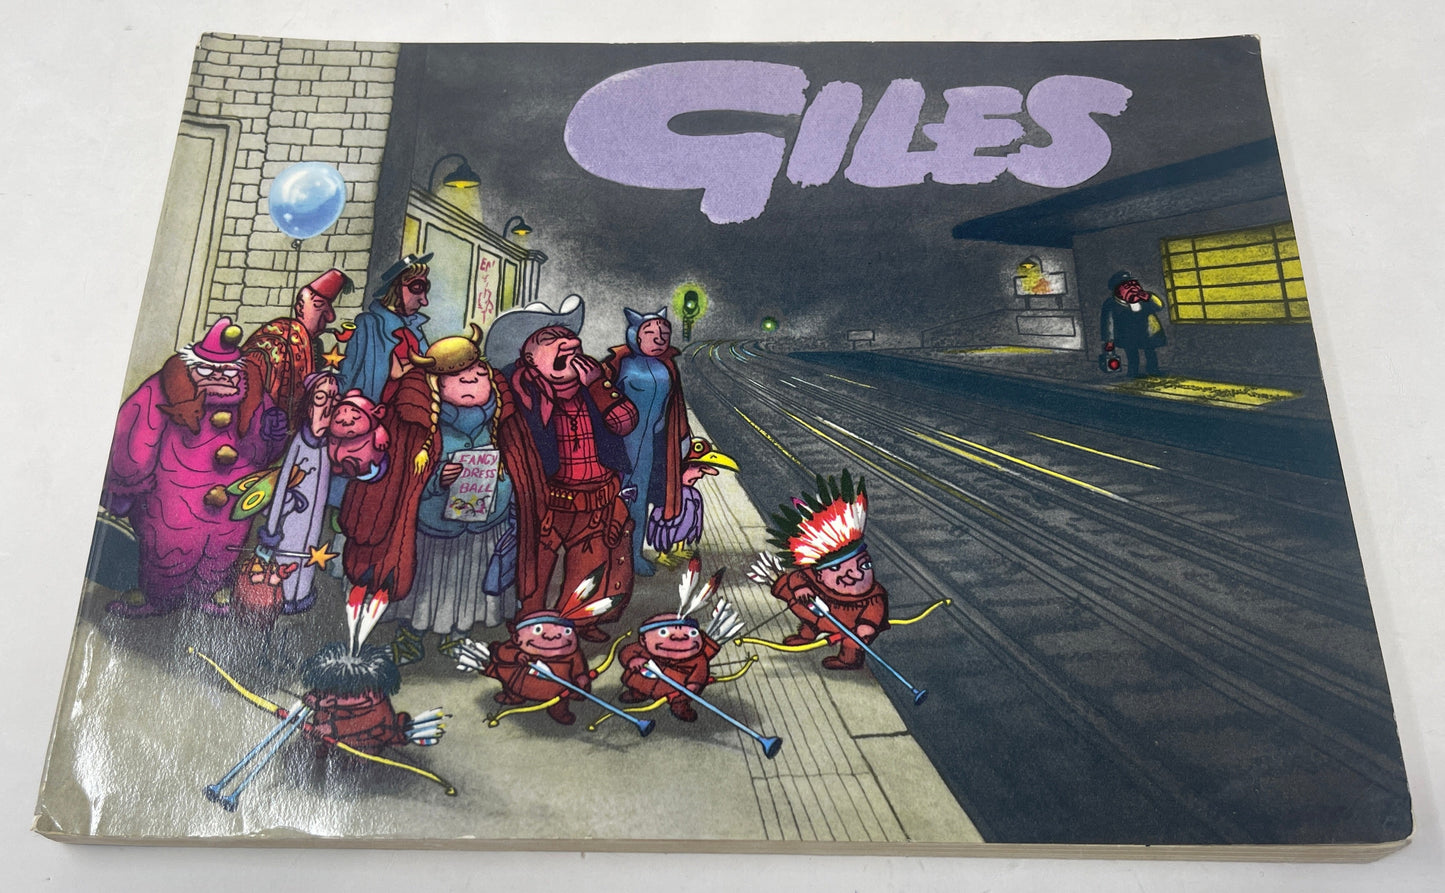 GILES Daily Express and Sunday Express Cartoons (13th Series)